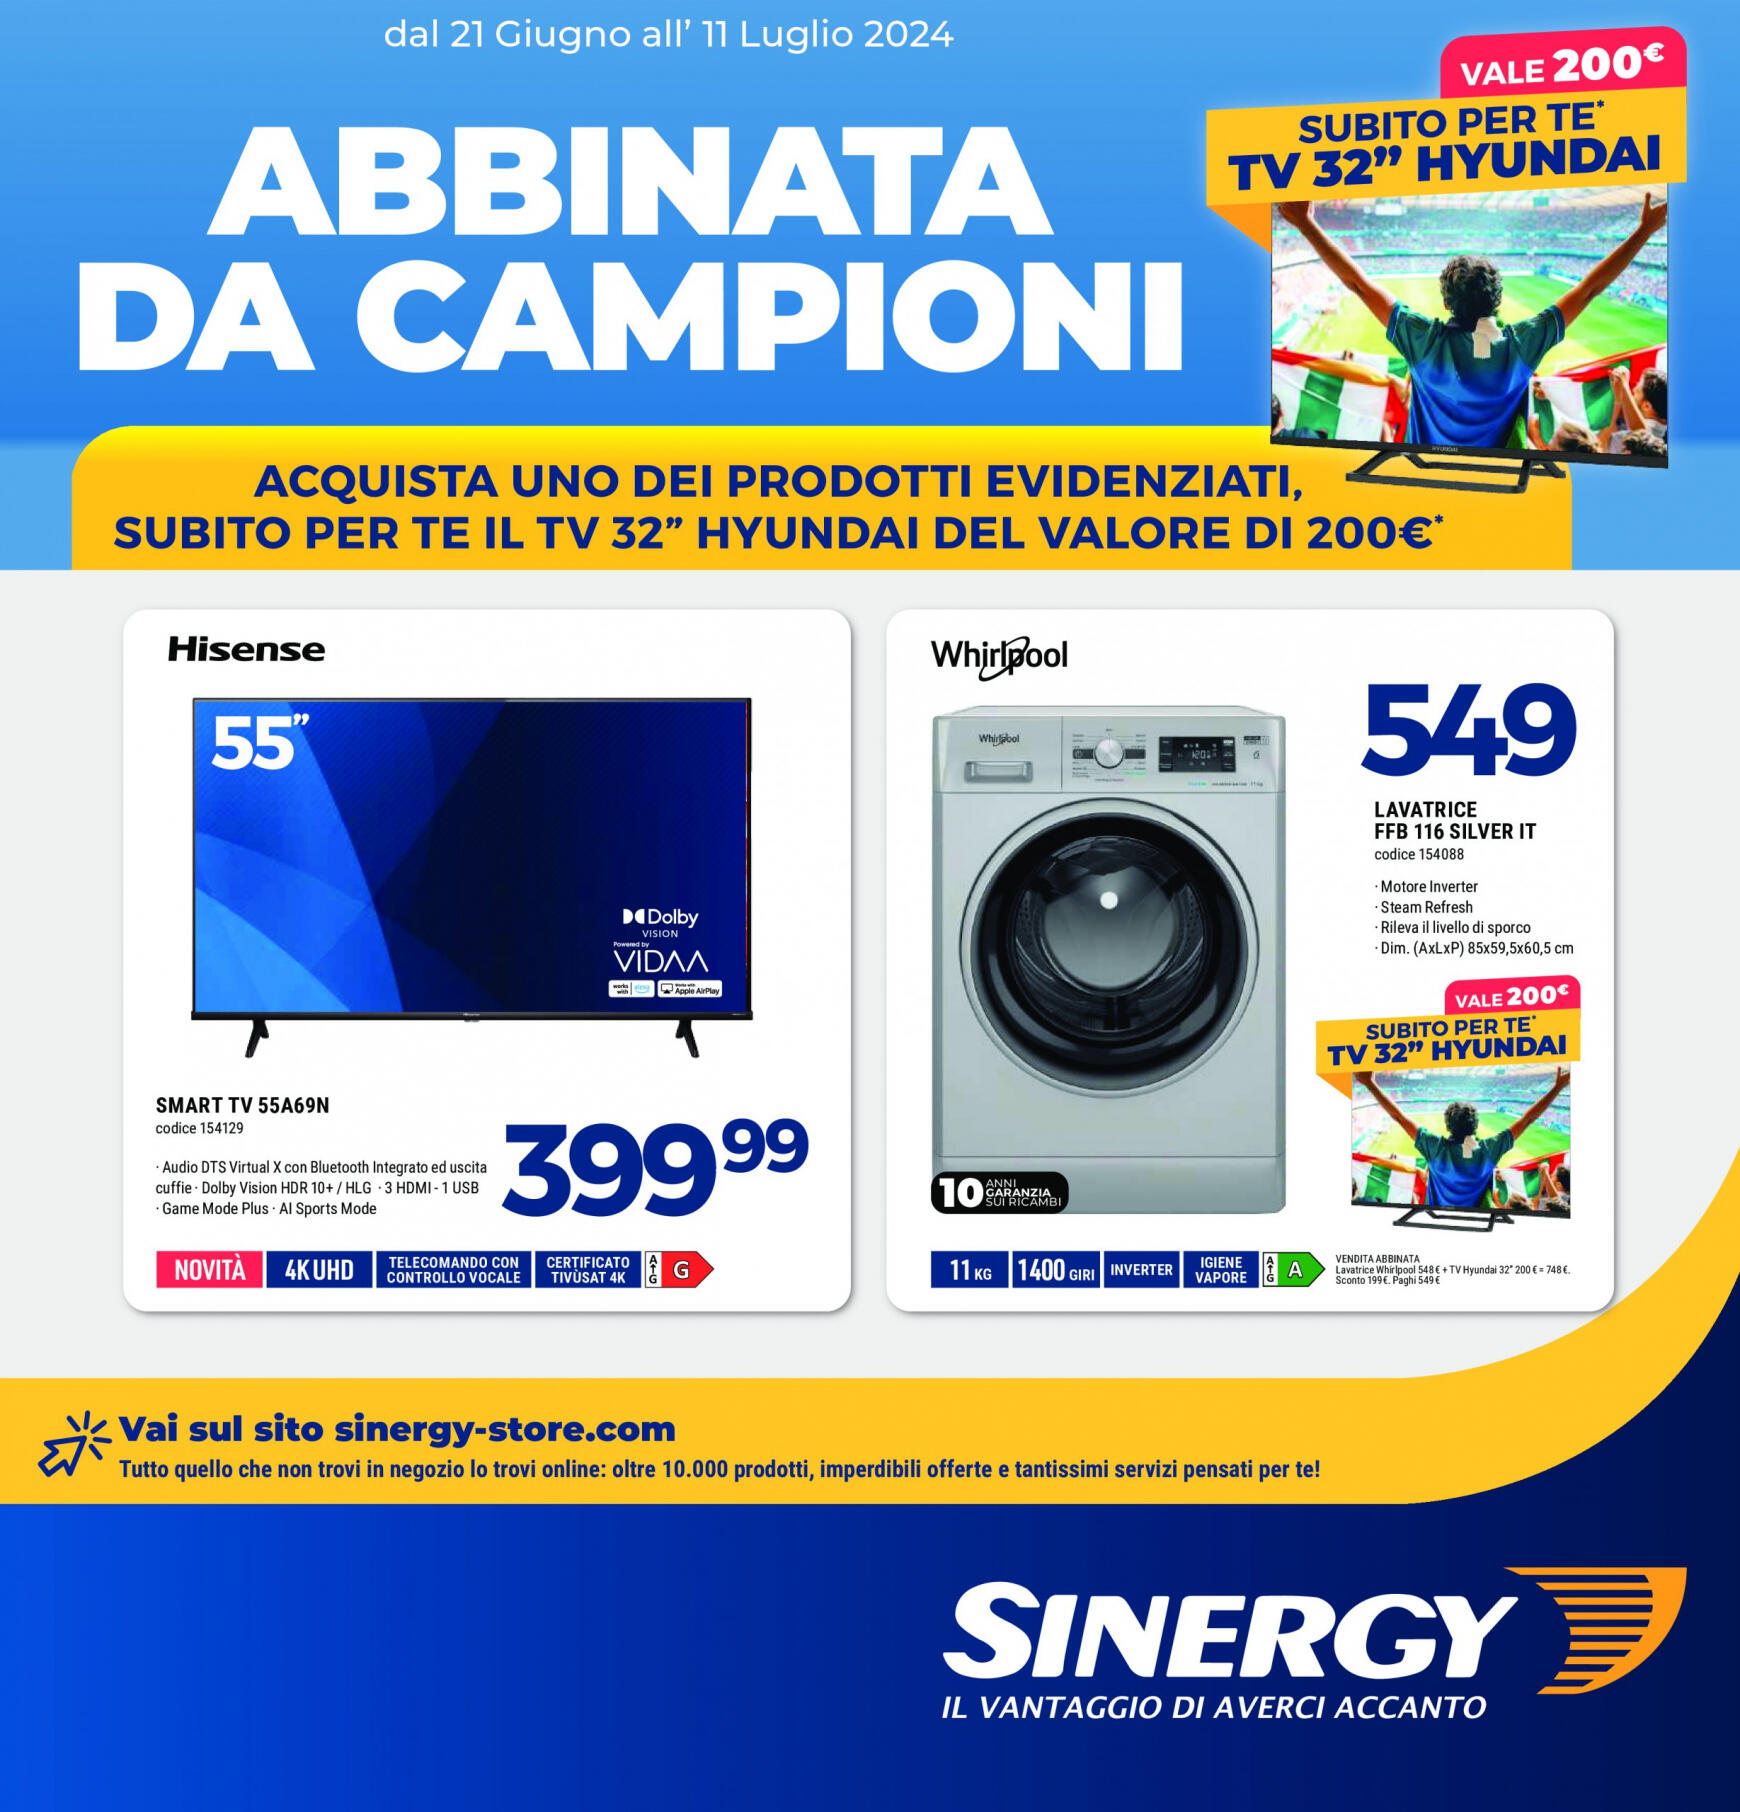 sinergy - Nuovo volantino Sinergy 21.06. - 11.07.